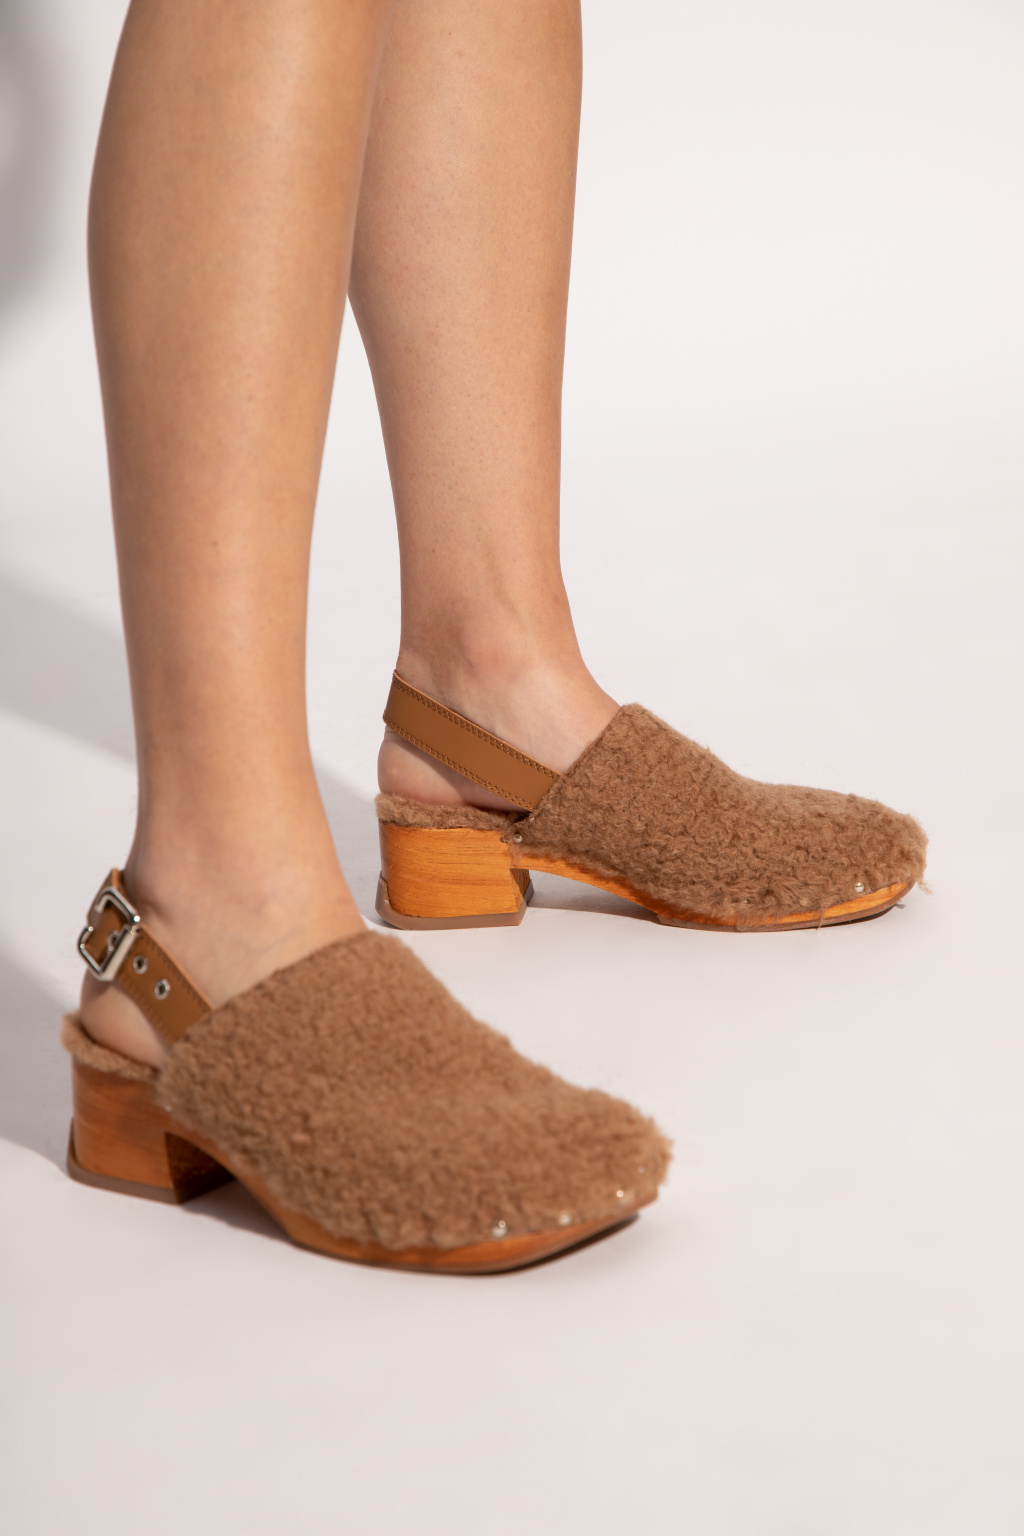 Miista ‘Lana’ heeled sandals